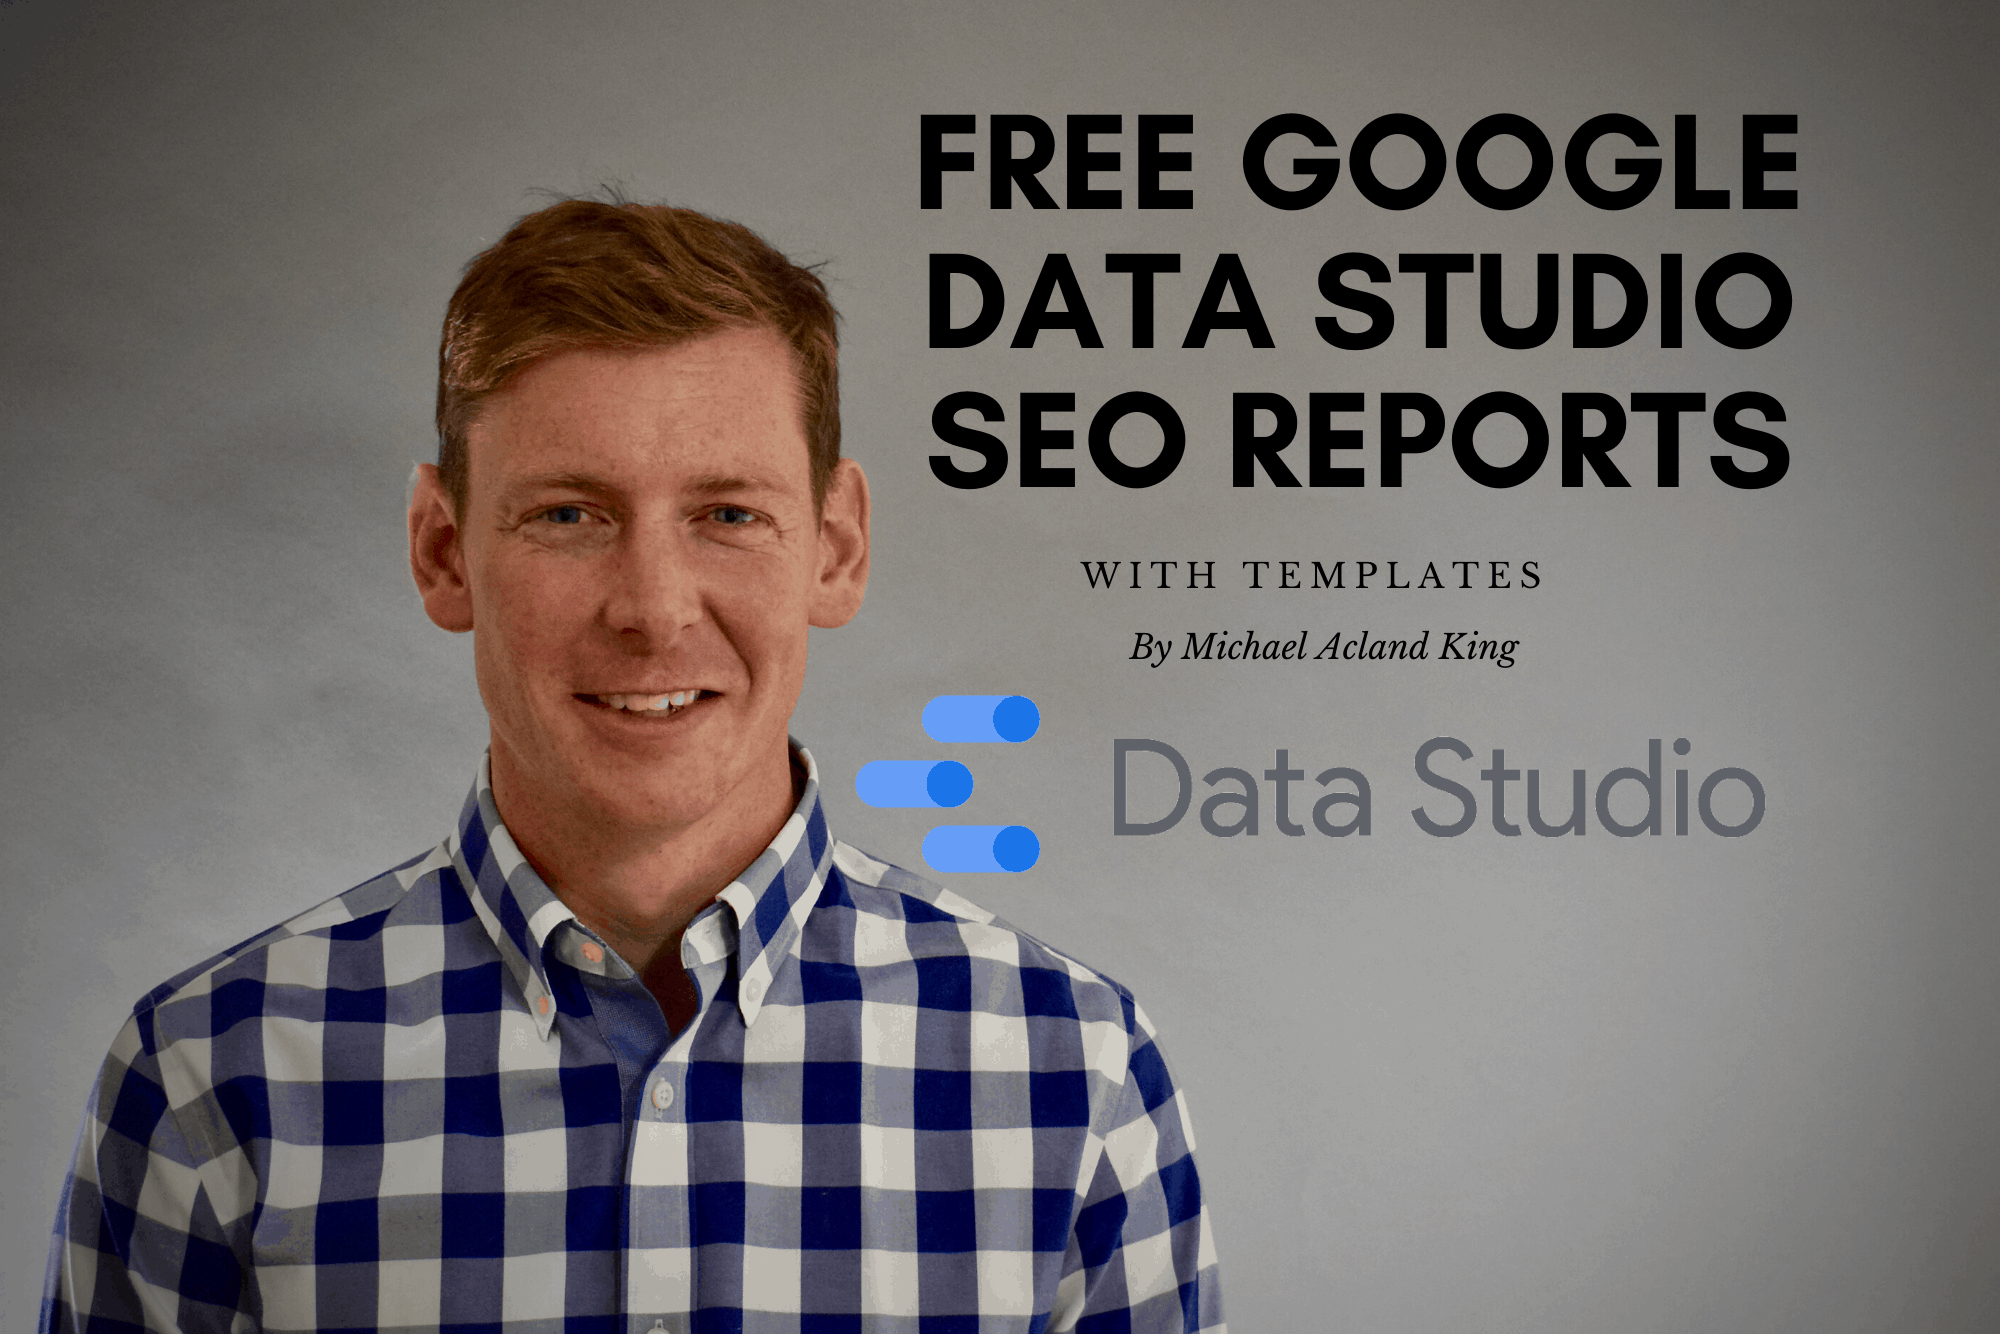 Google Data Studio SEO Report